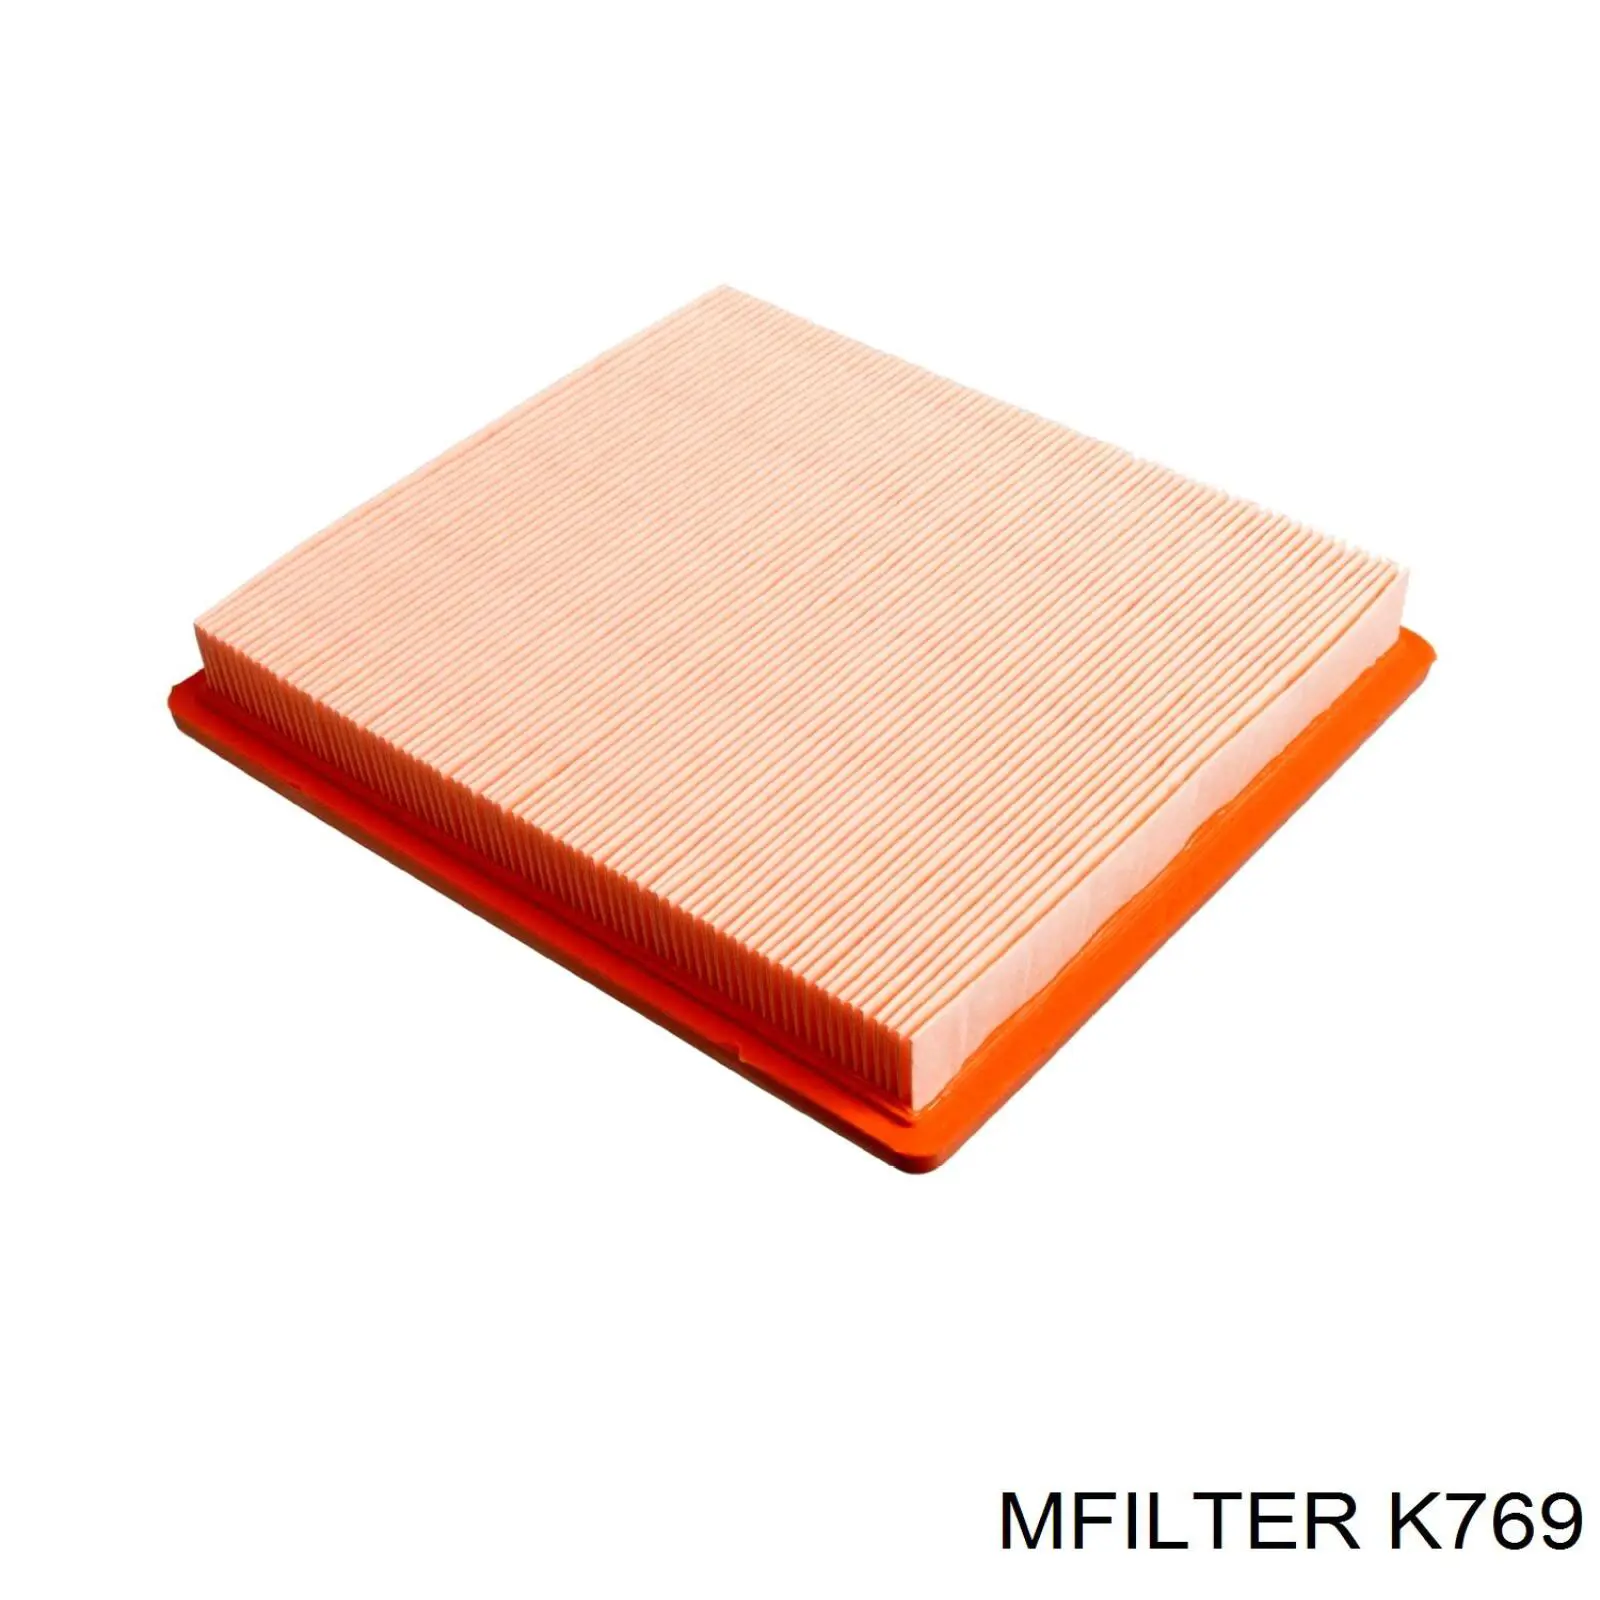 K769 Mfilter filtro de aire